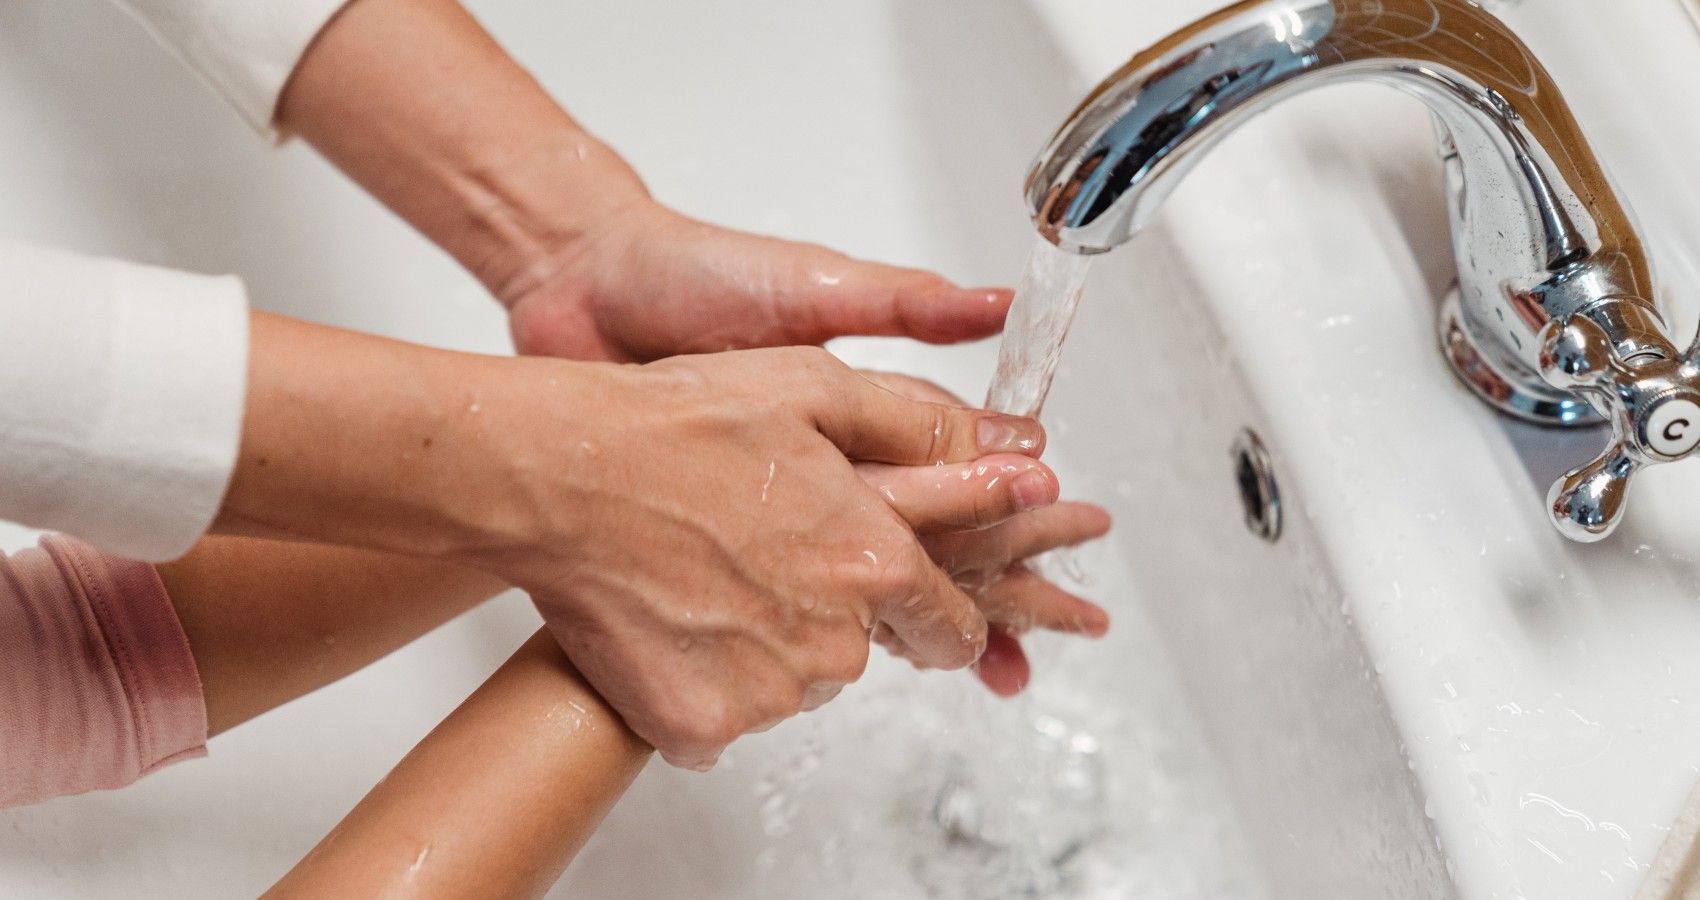 How Positive Parenting & Hand Hygiene Keep Kids Healthy